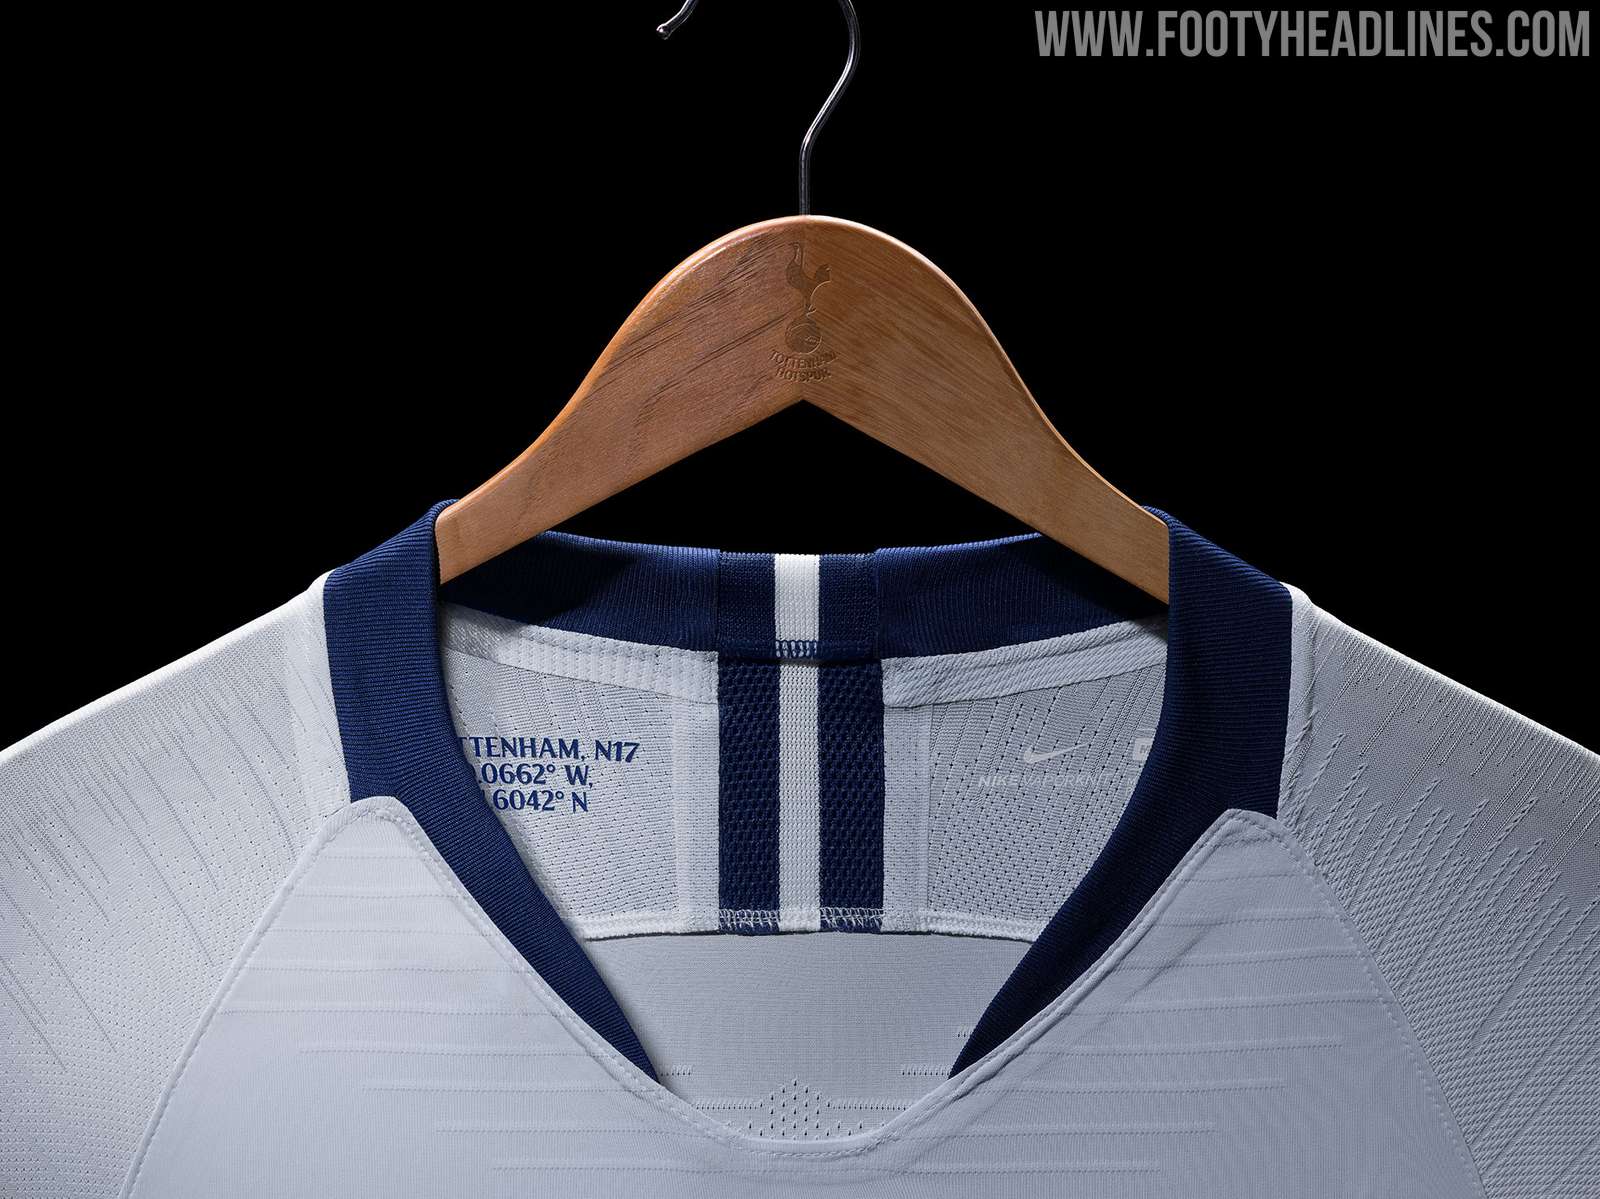 Tottenham Hotspur's 2018/19 Nike kit reveal!, Tottenham Hotspur F.C.,  Tottenham Hotspur F.C., Nike, Nike, #BuiltToRise Our new 2018/19 Nike  Football kit is on sale now -  #COYS